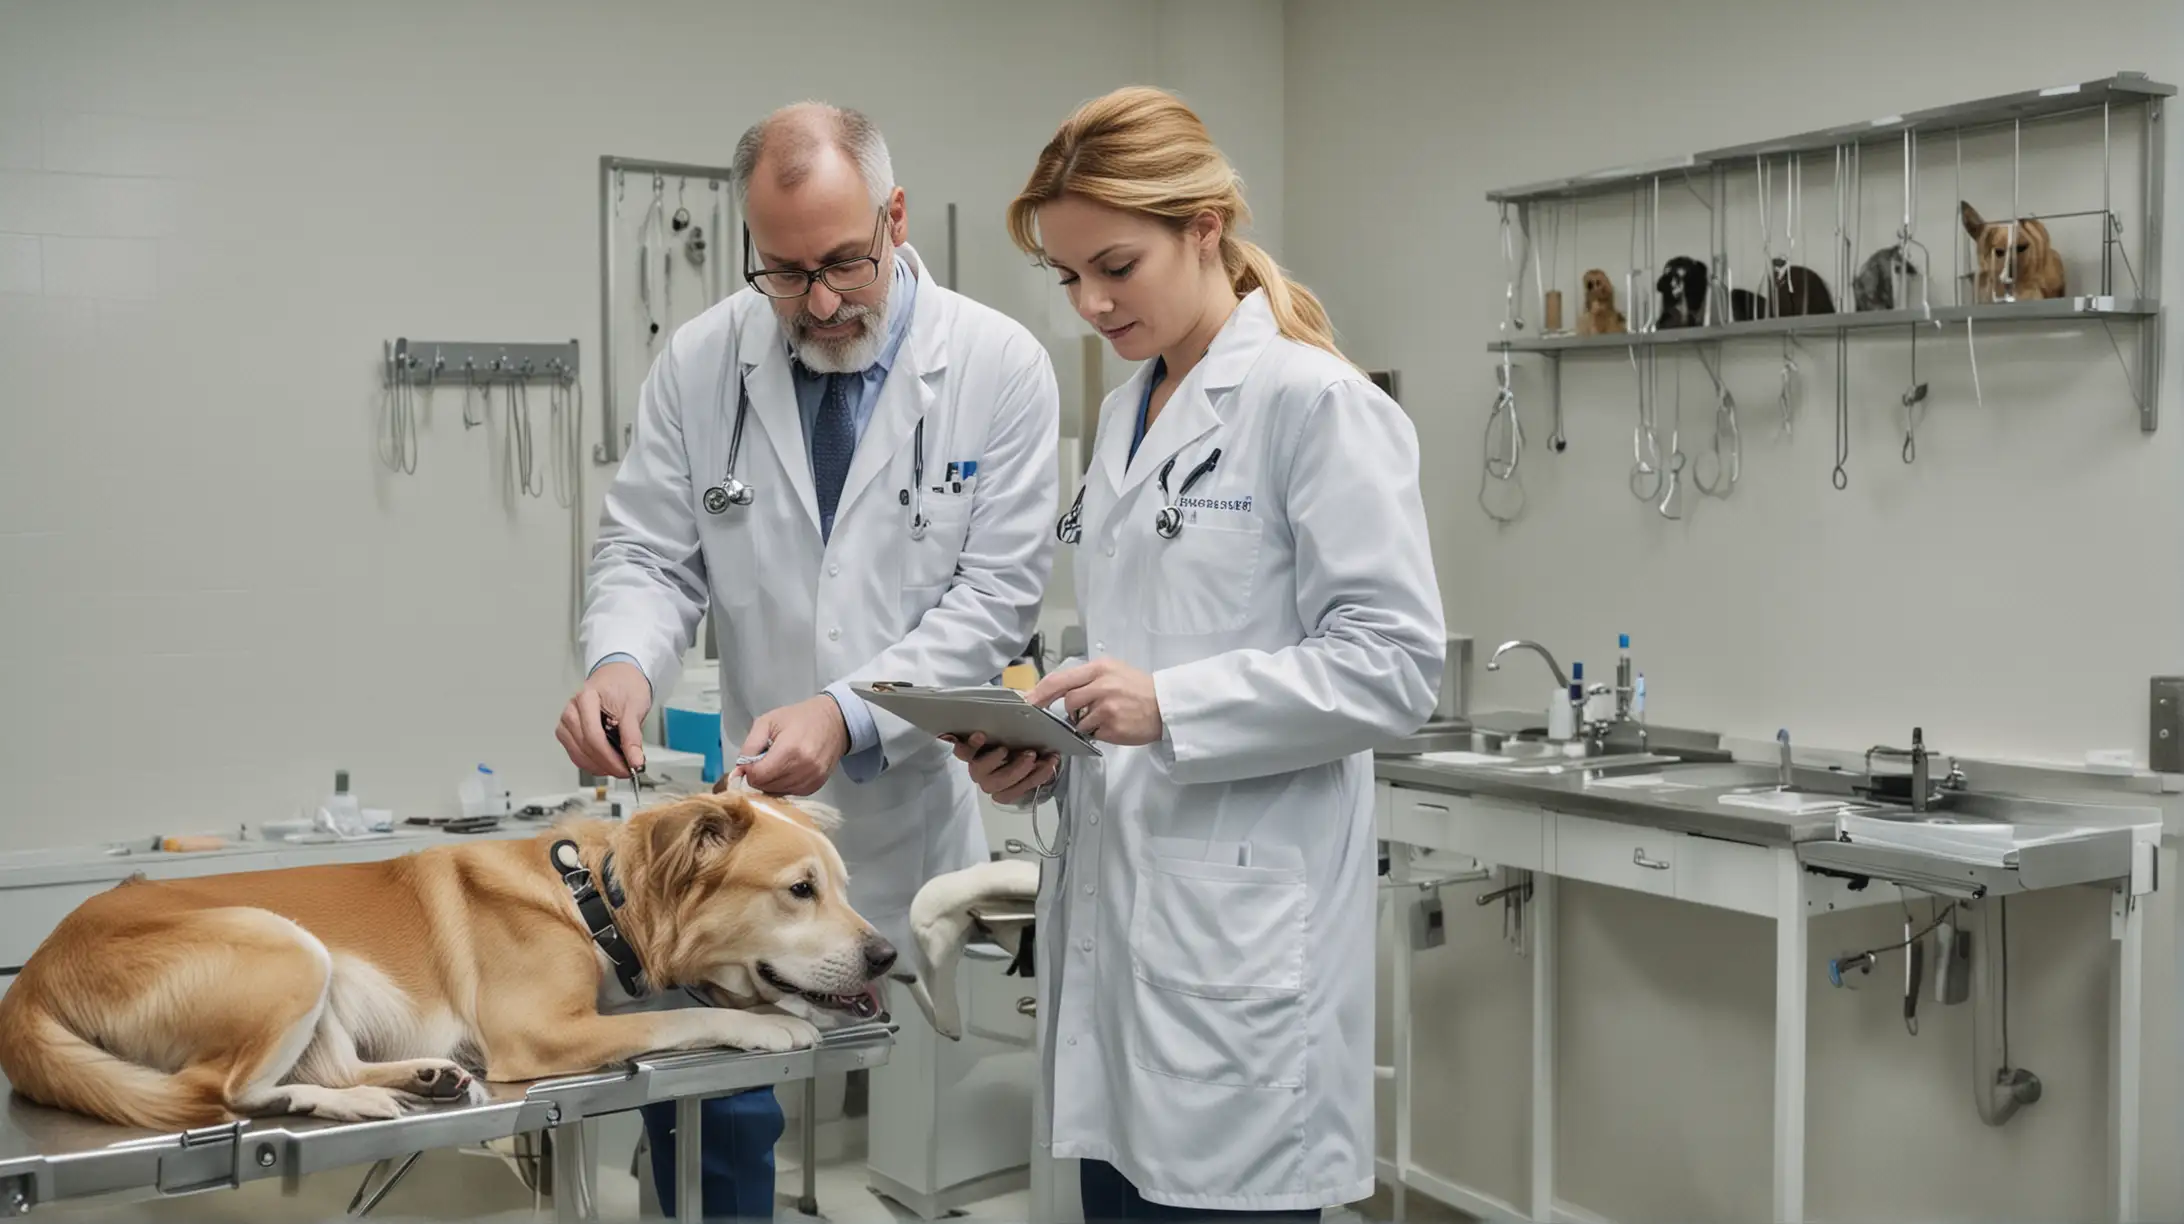 Veterinarians Examining Dogs in Clinic Setting